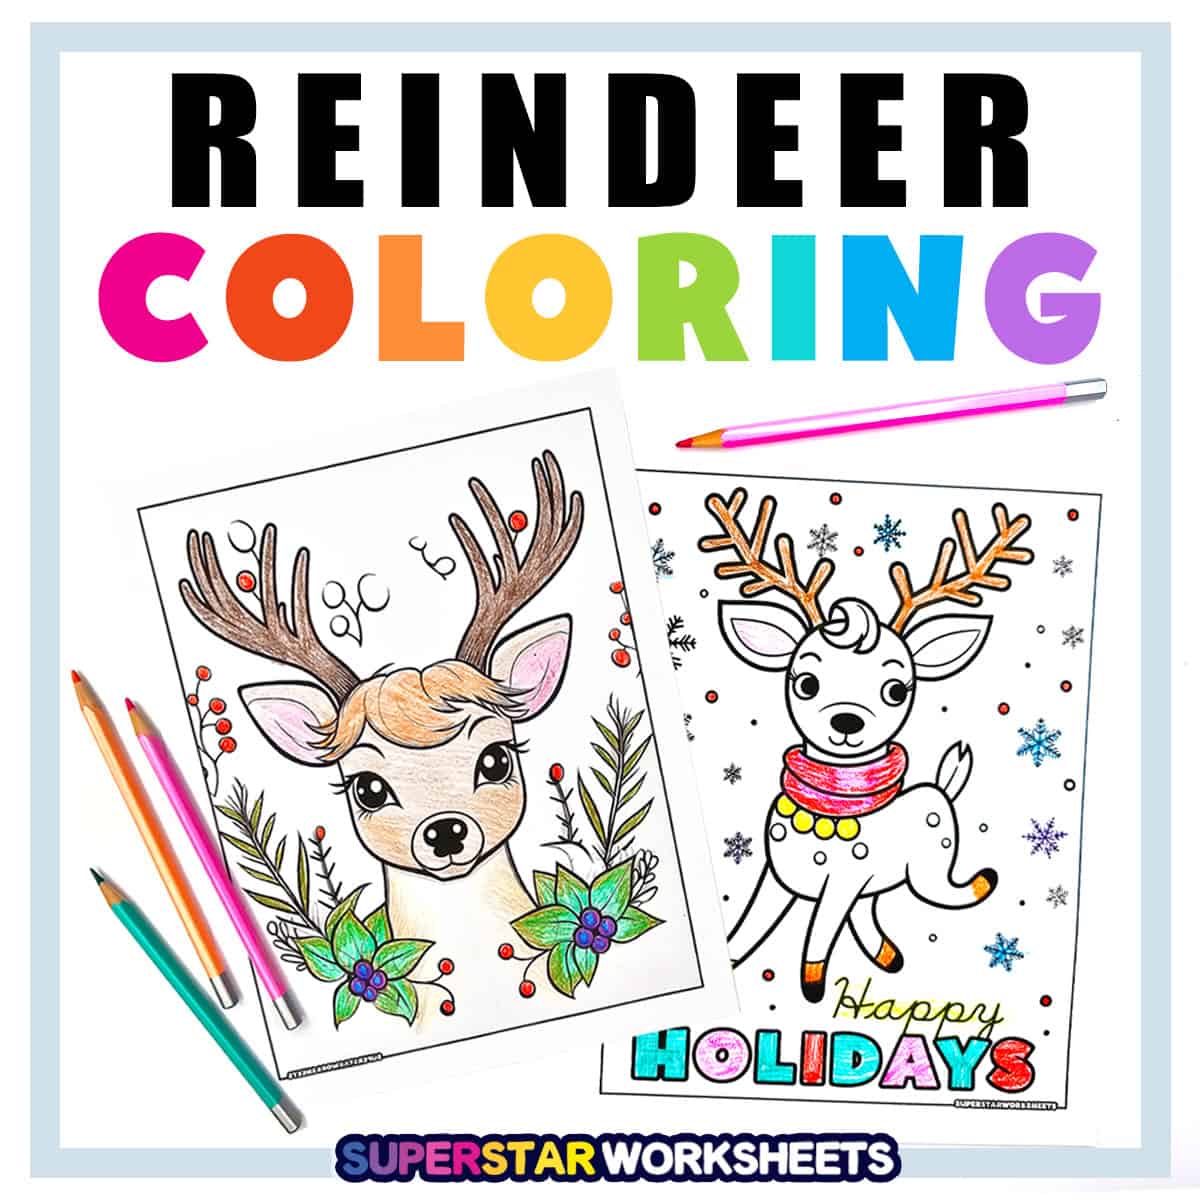 reindeer head coloring pages for kids printable